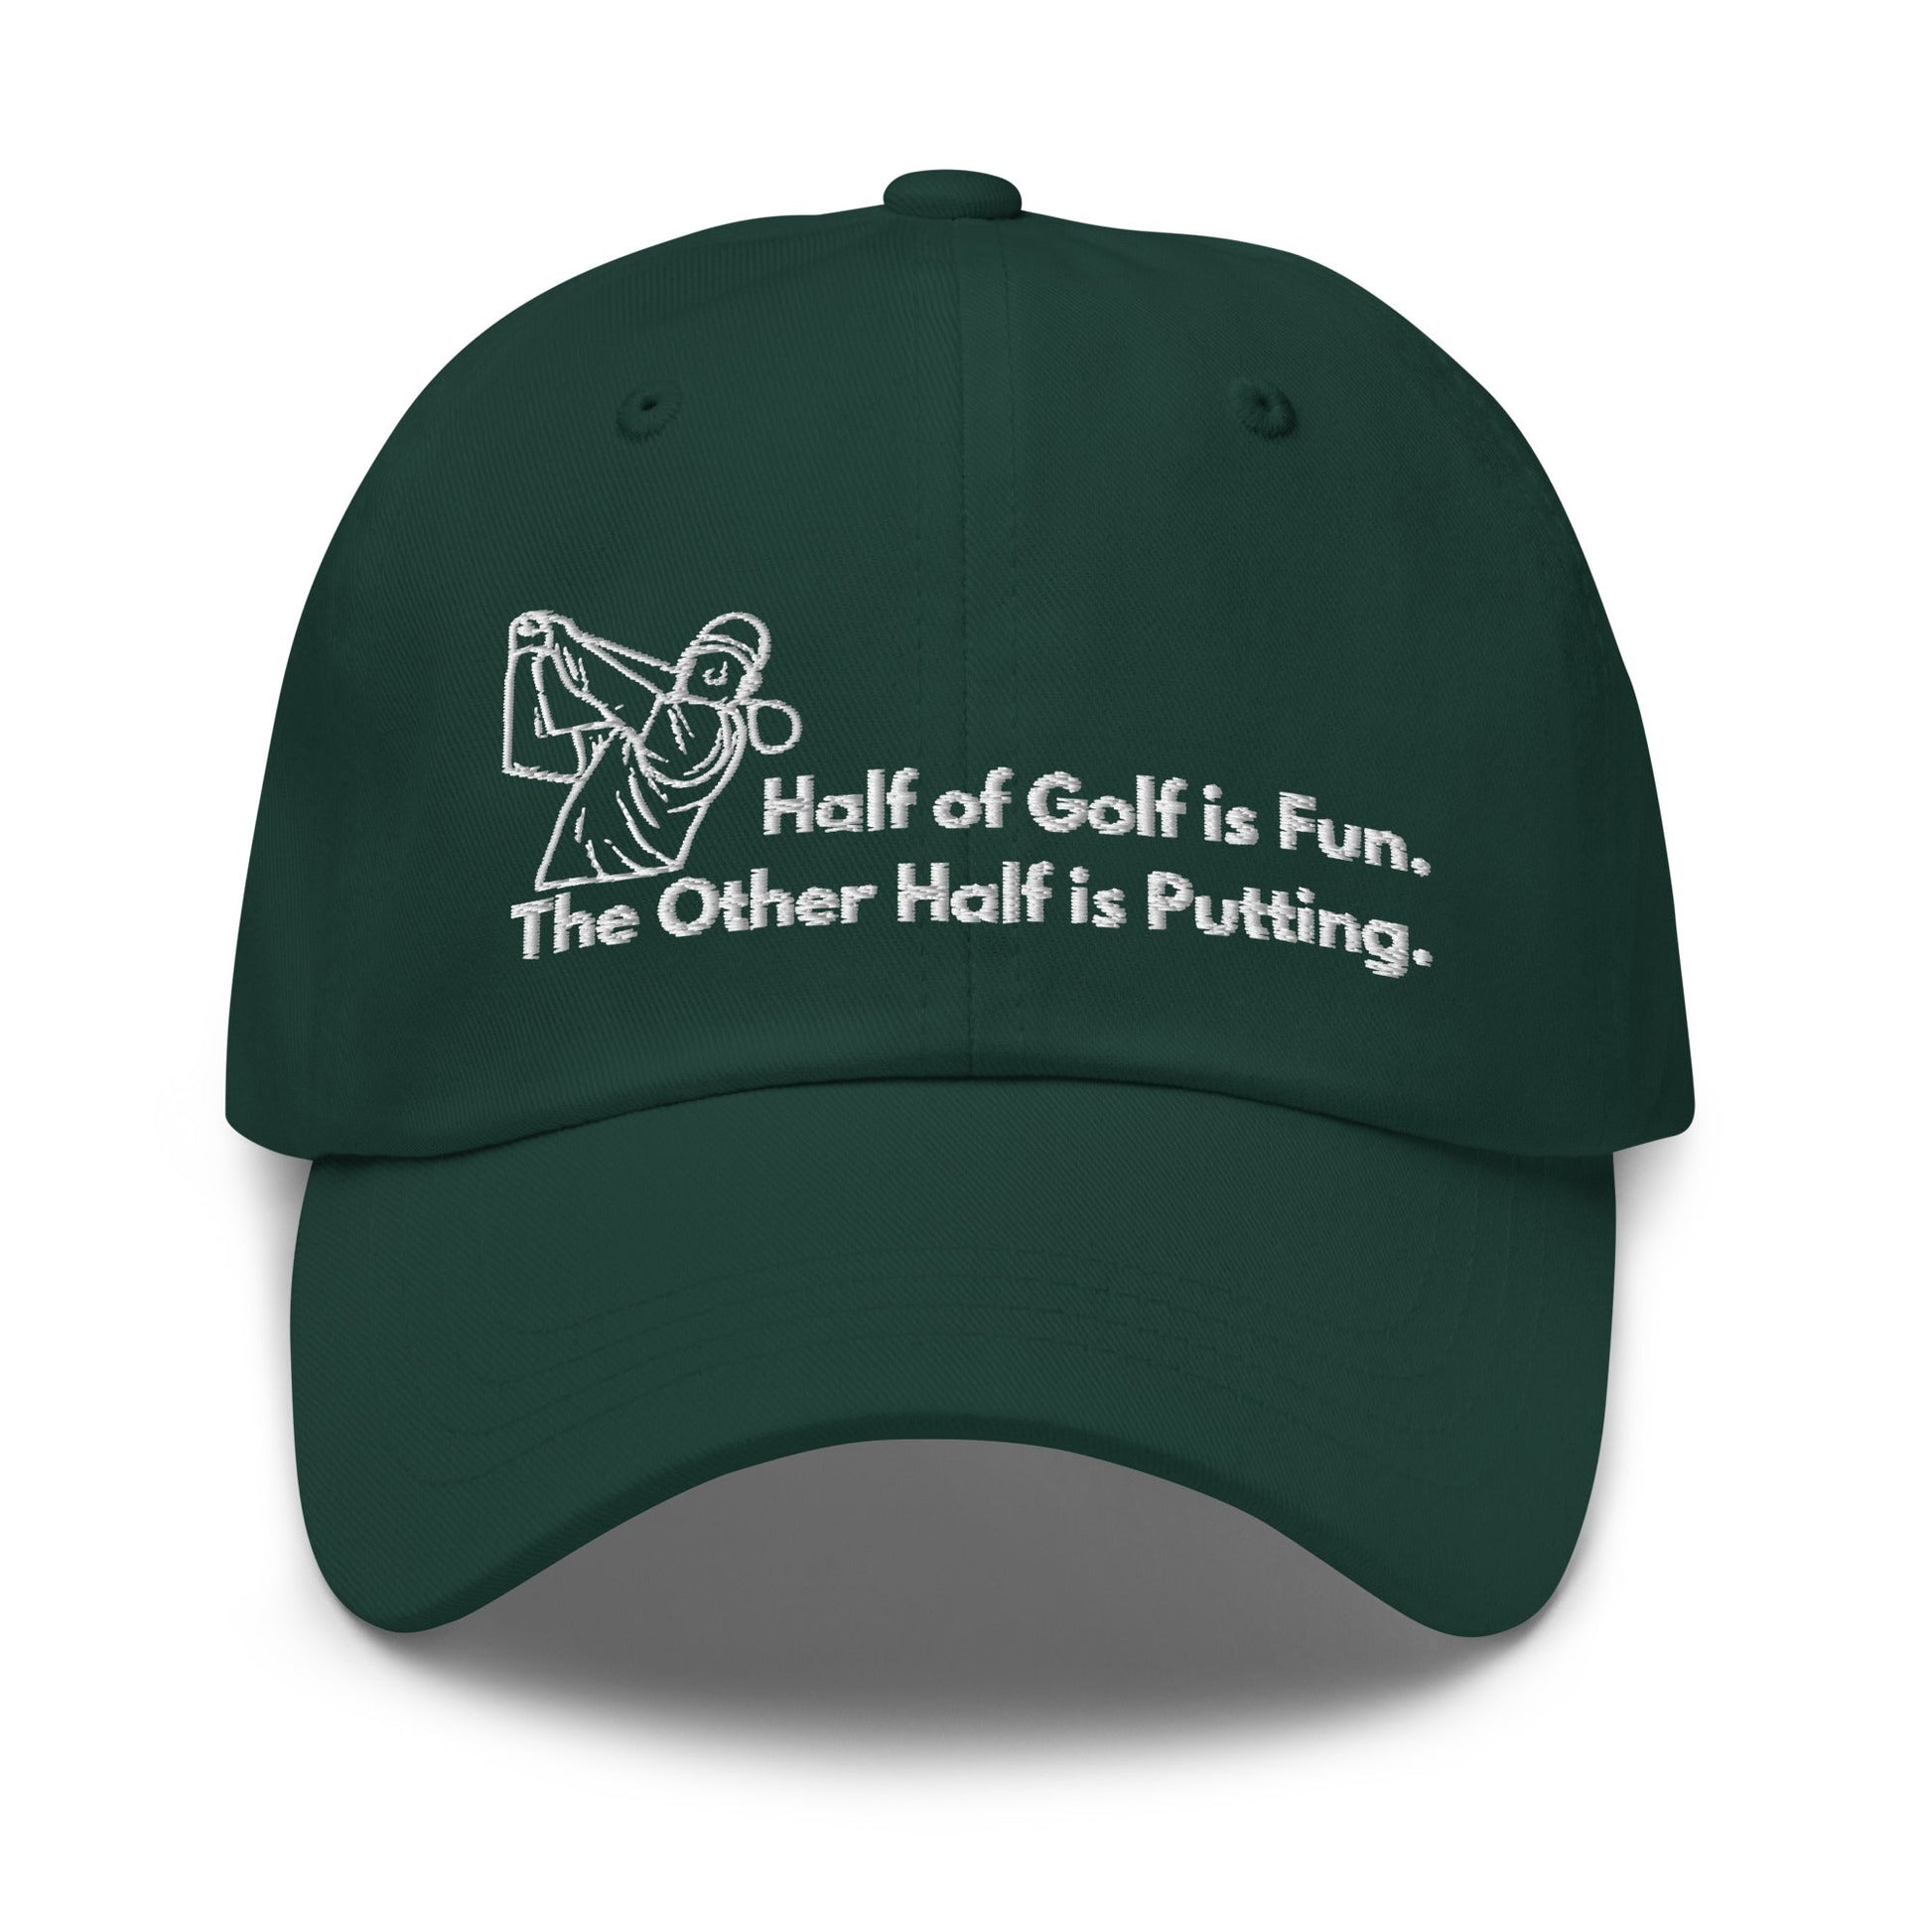 Funny Golfer Gifts  Dad Cap Half of Golf is Fun